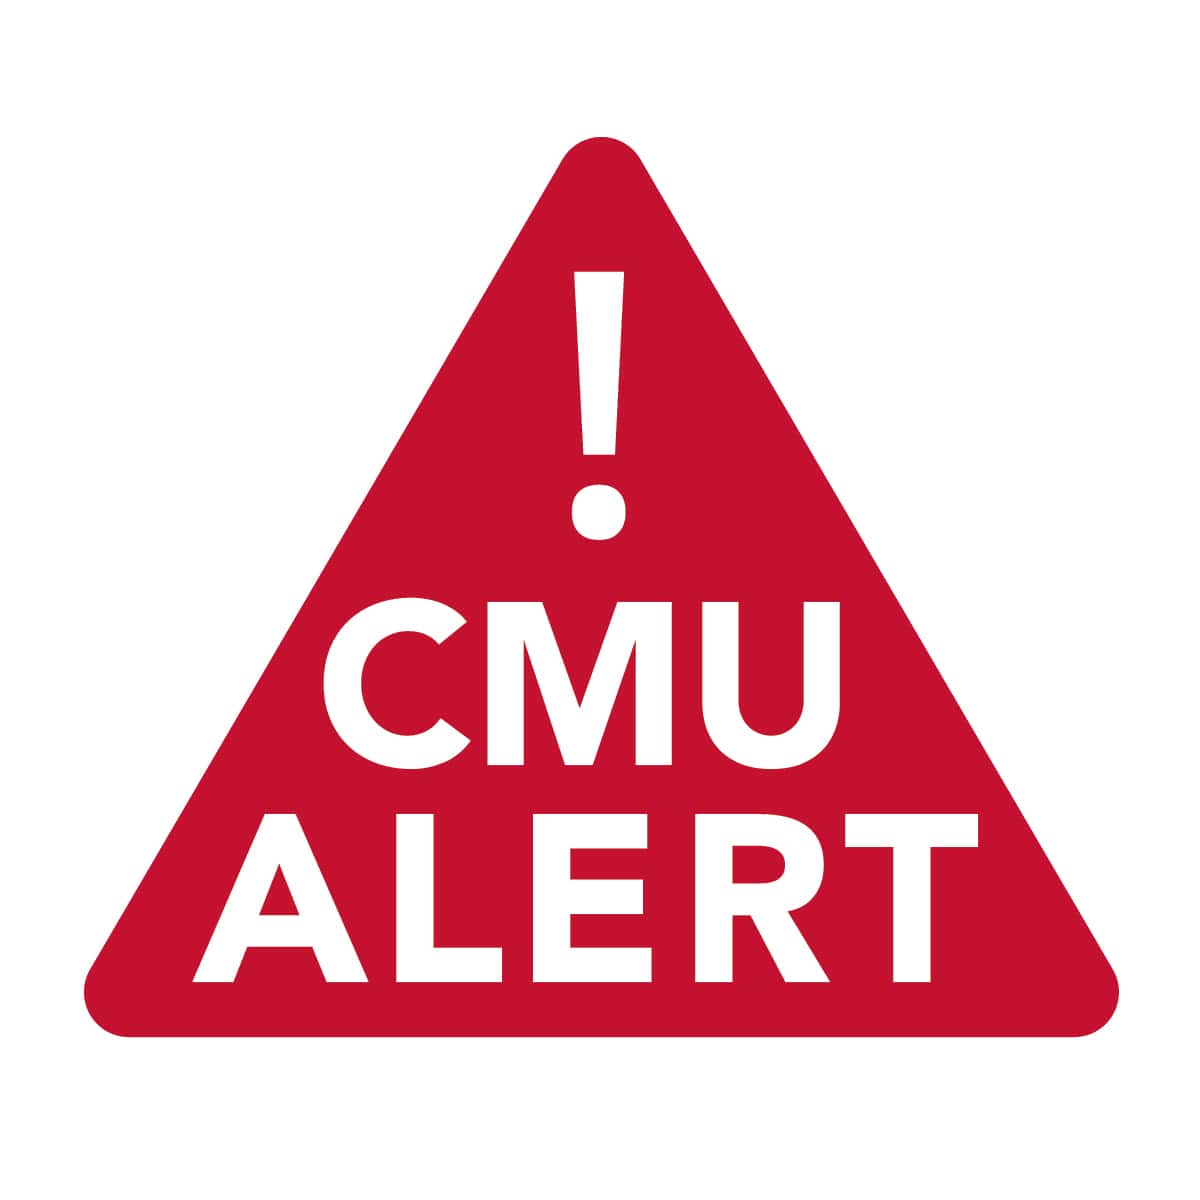 CMU Alert graphic